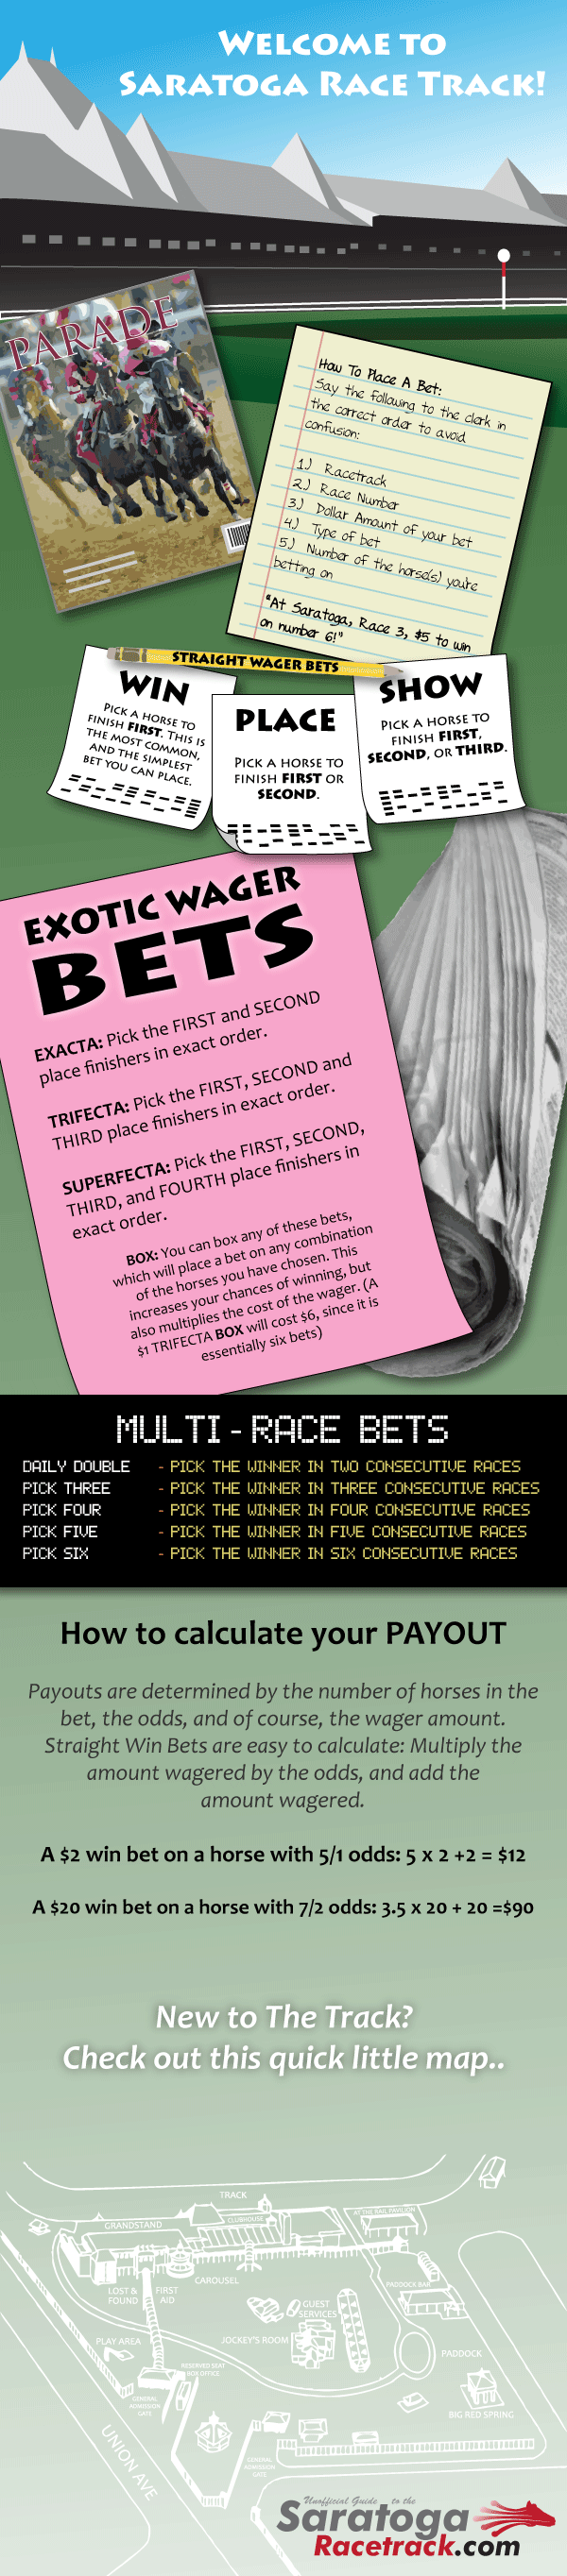 Saratoga Racetrack Betting Tips